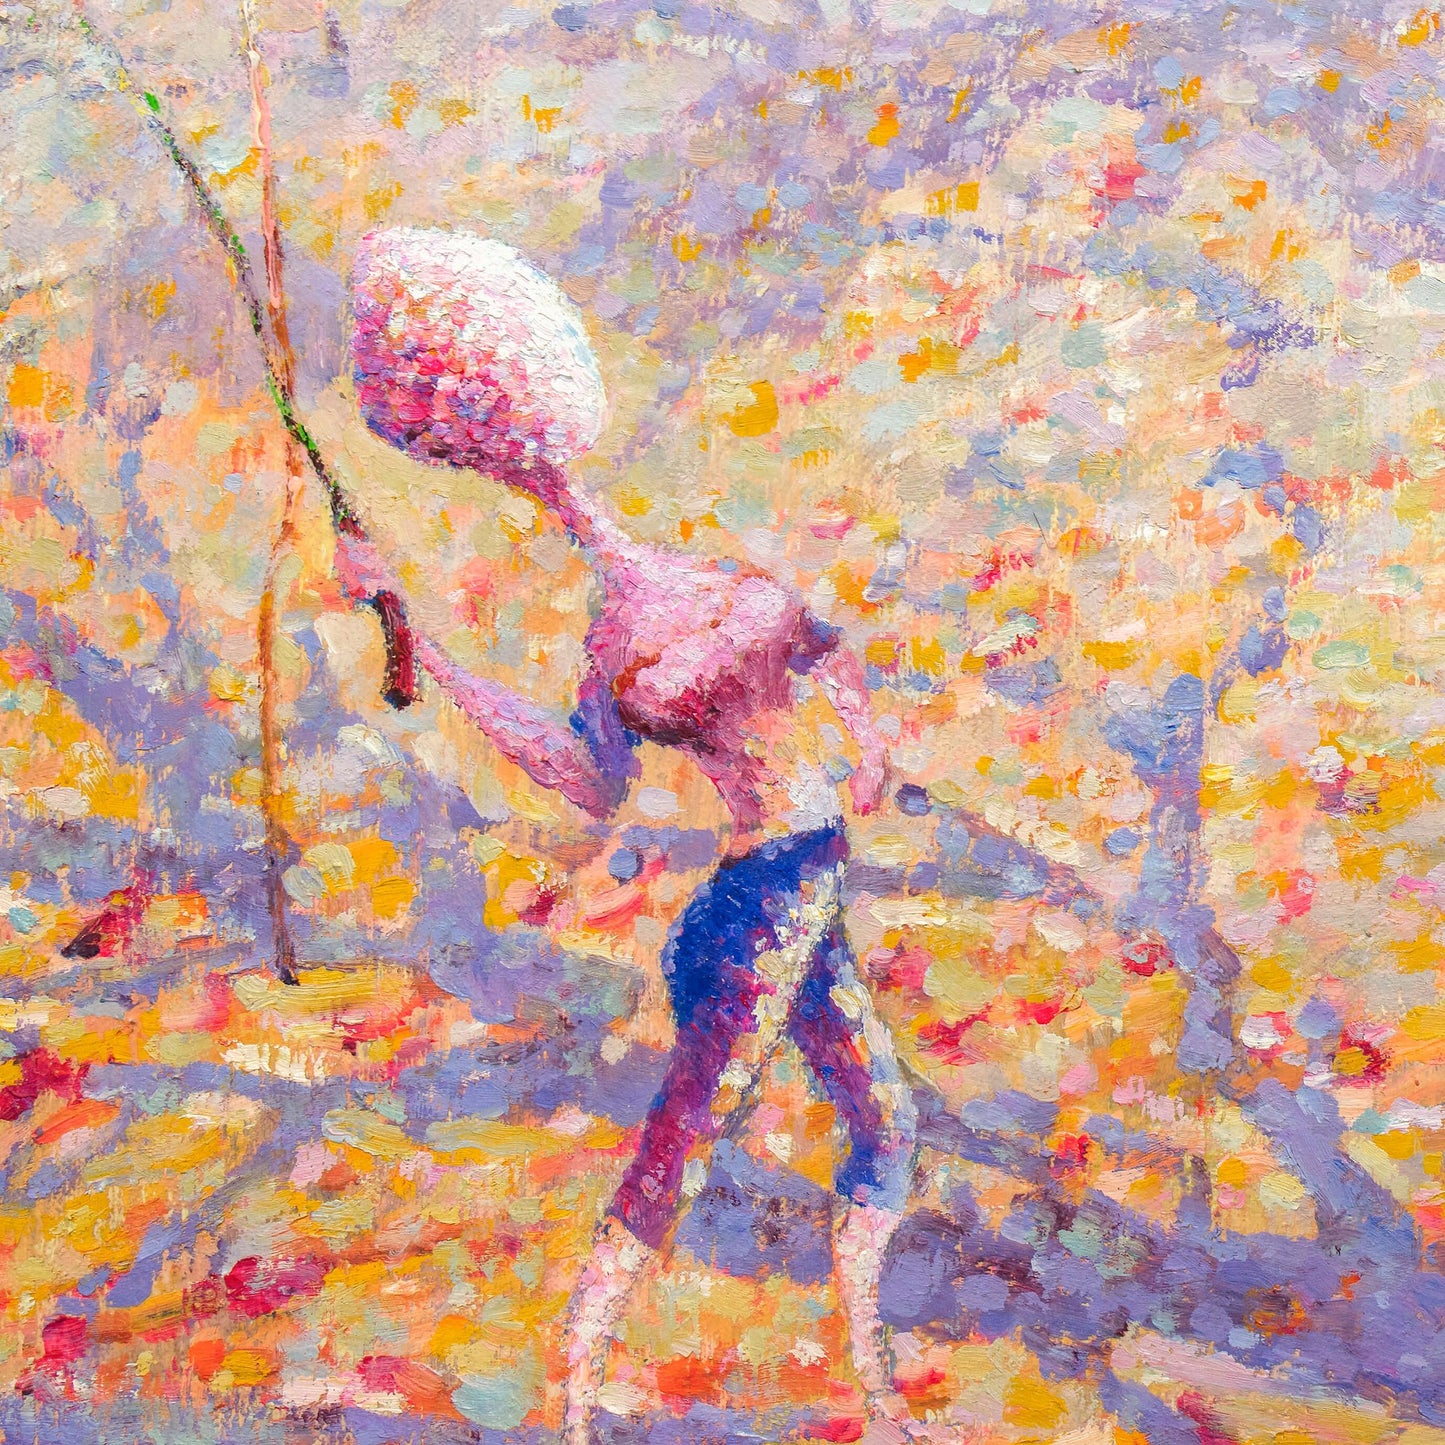 A Beautiful Autumn Day Captured in an Original Oil Painting - Modern Art by Xu Bin